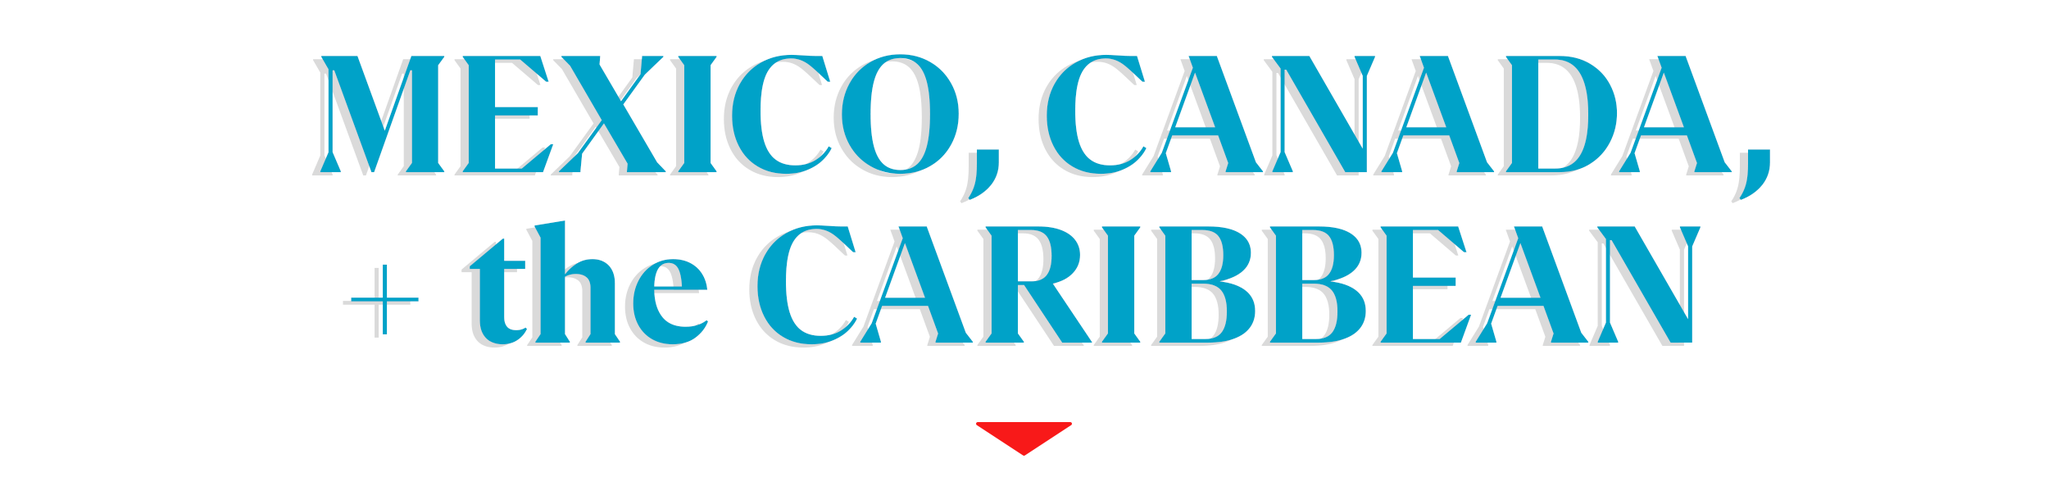 mexico, canada, the caribbean